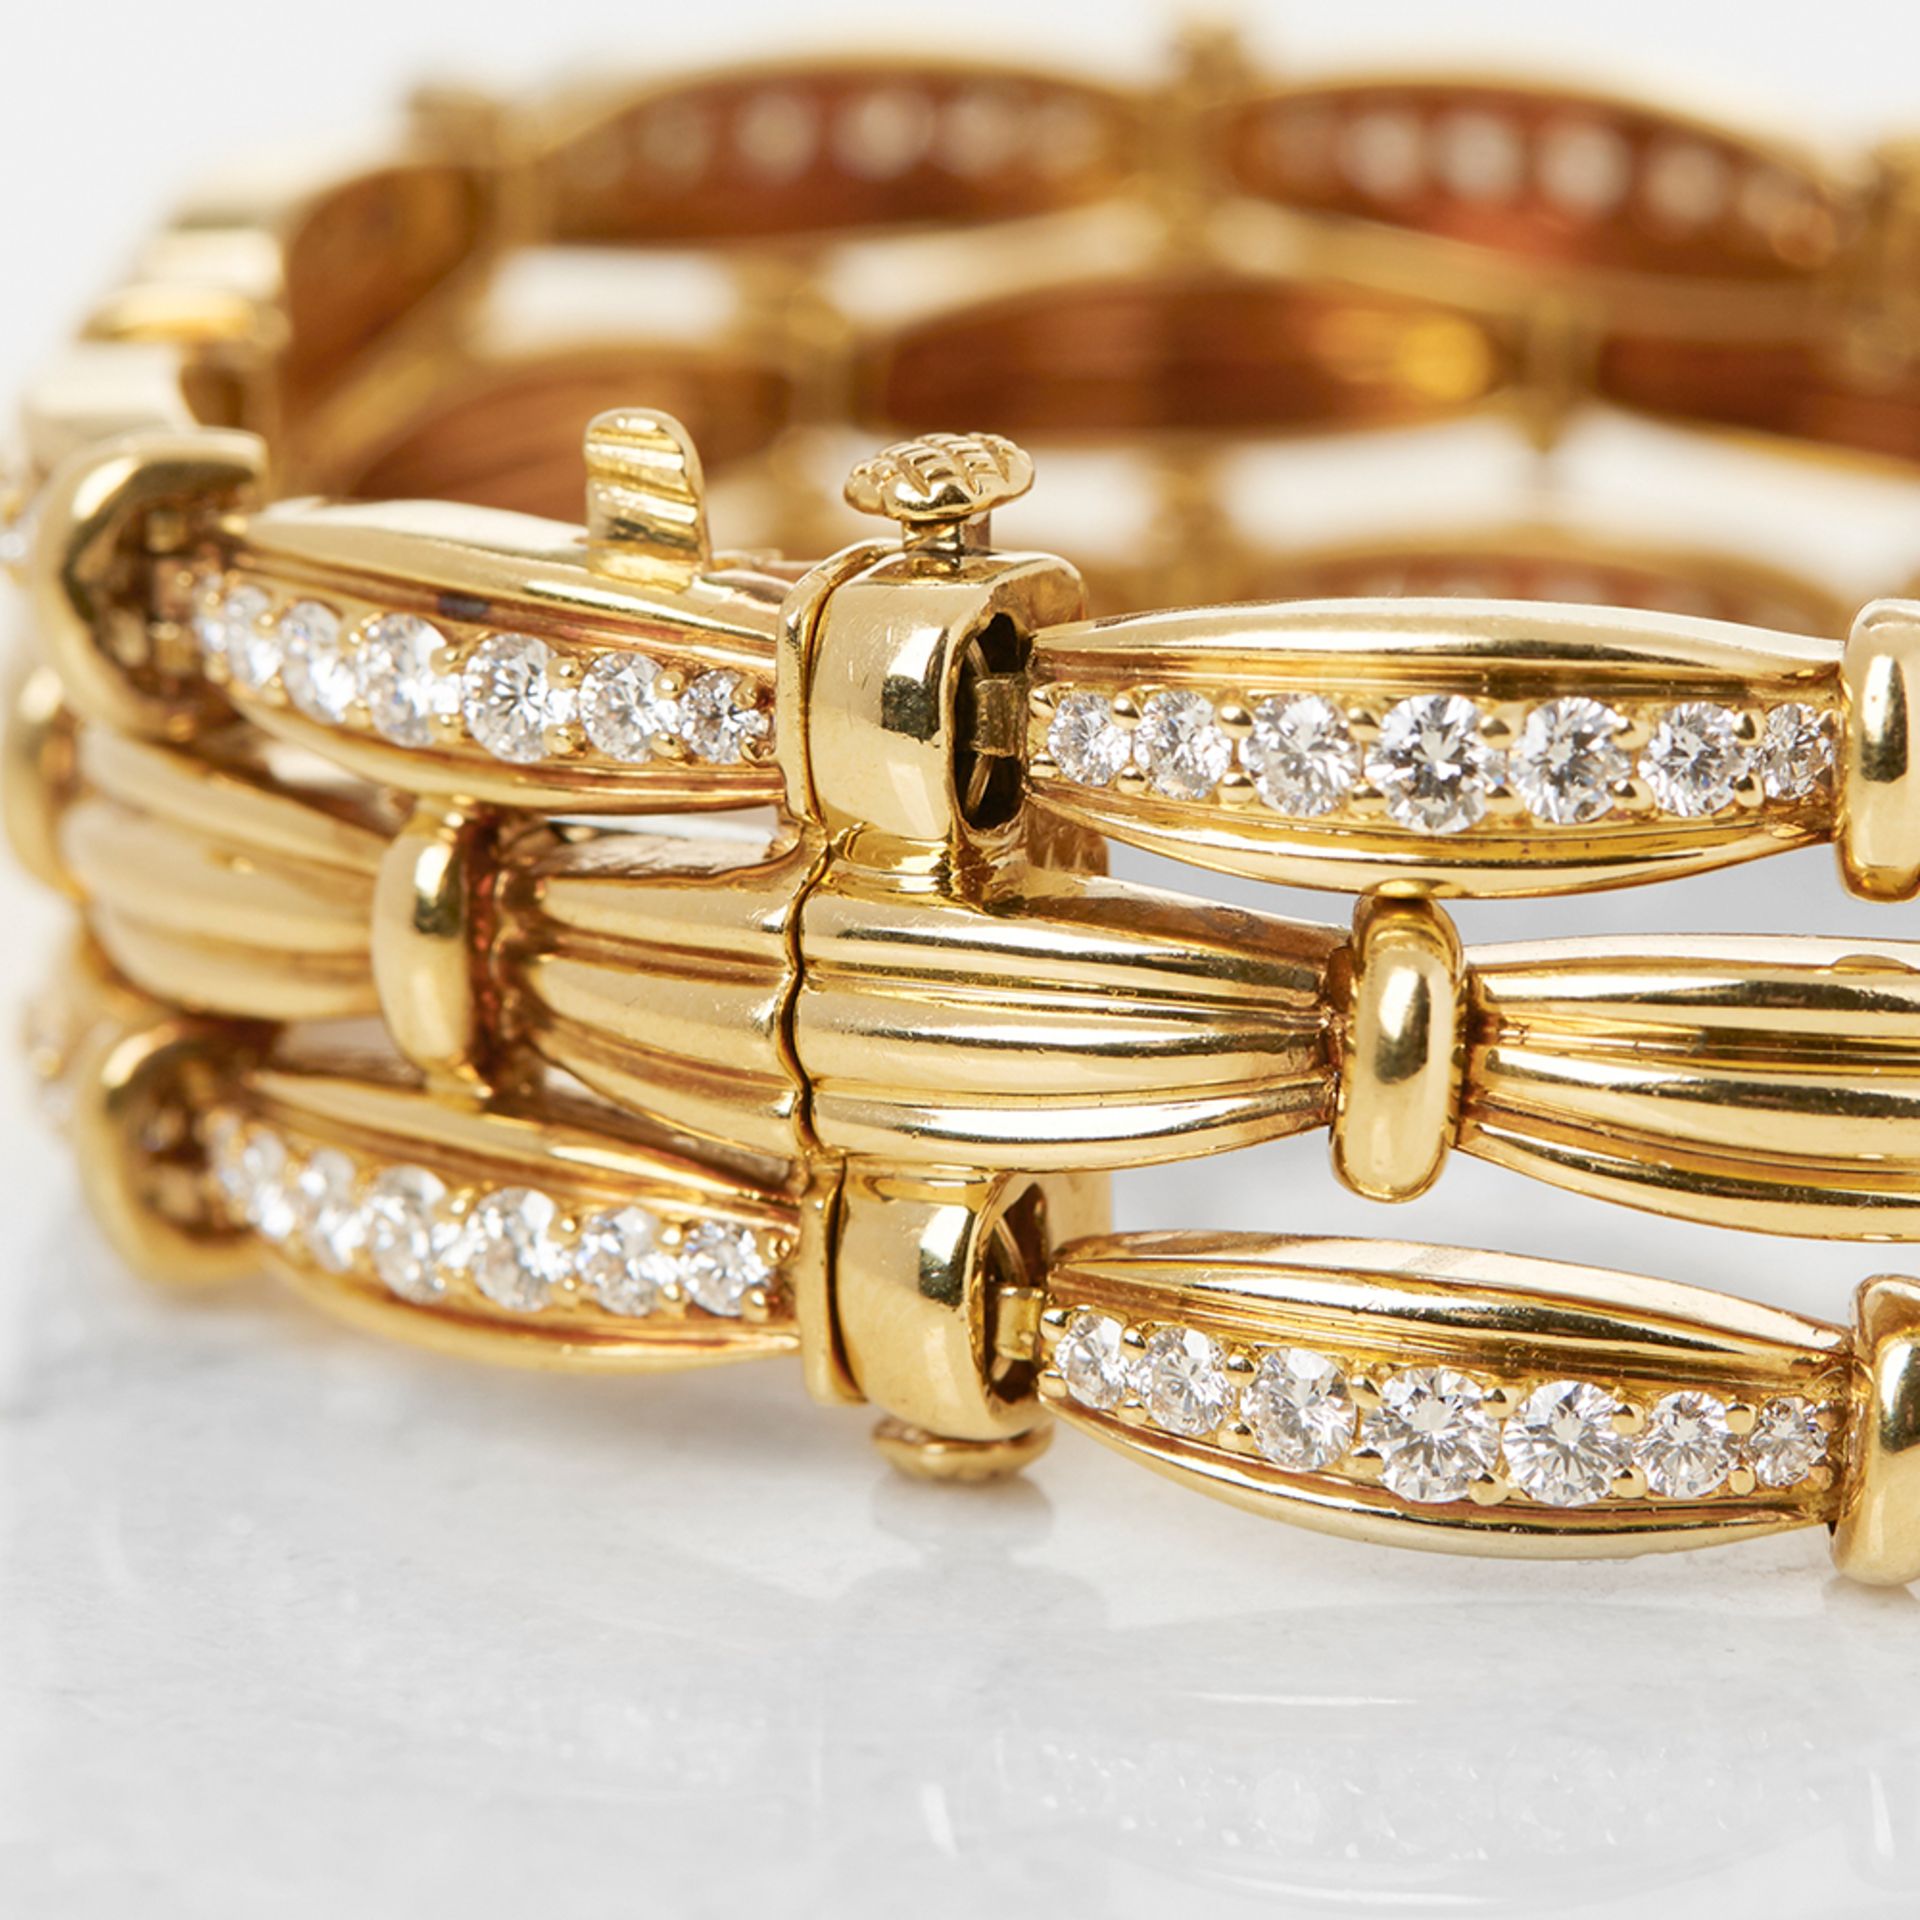 Tiffany & Co. 18k Yellow Gold Diamond Three Strand Vintage Bracelet with Presentation Box - Image 8 of 17